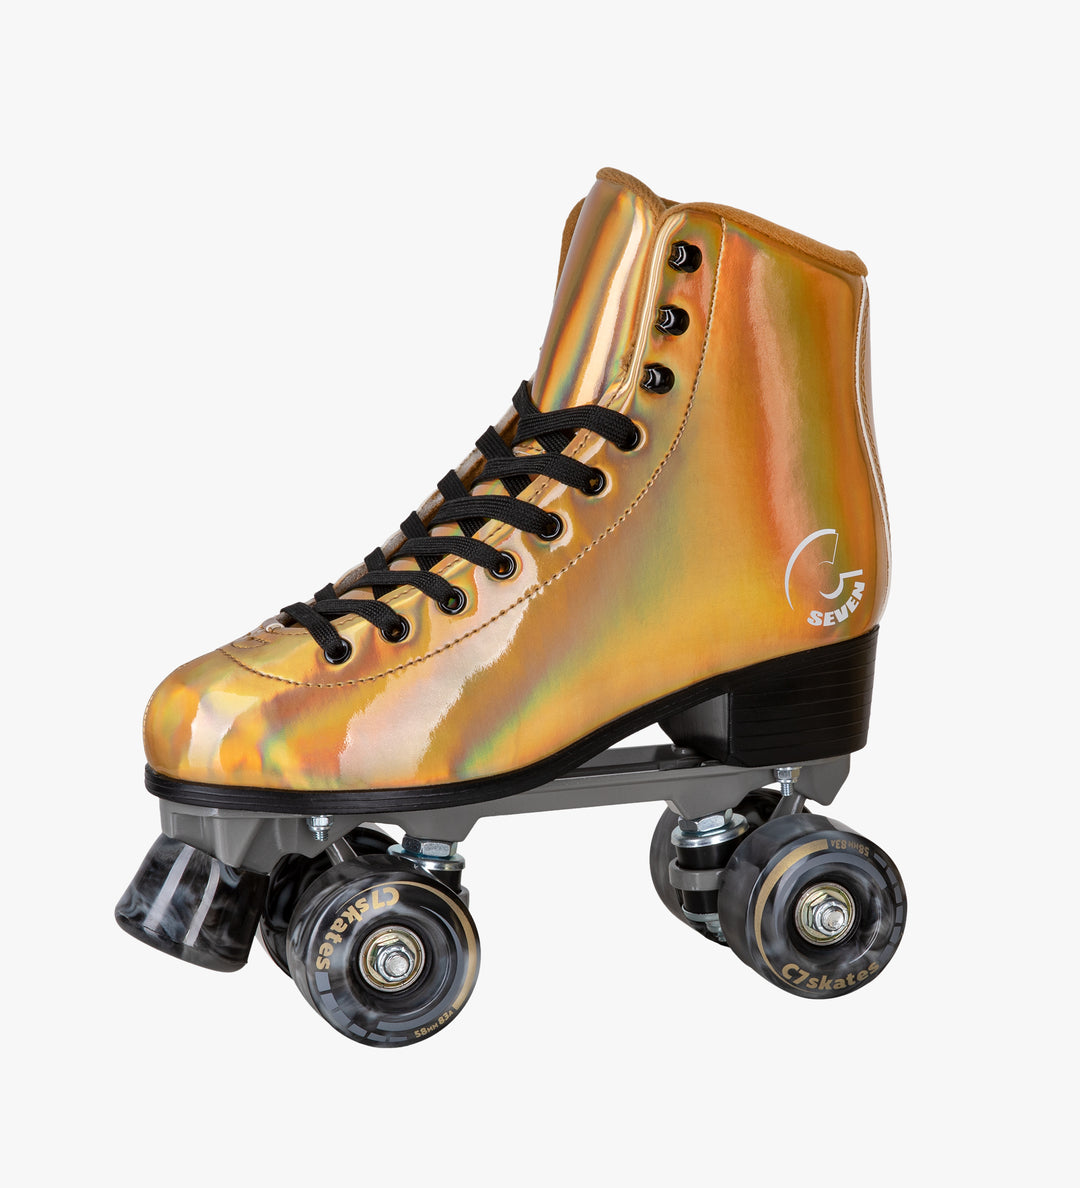 C7skates Women's Icon Farrah Quad Holographic Roller Skates - Gold - Size 7